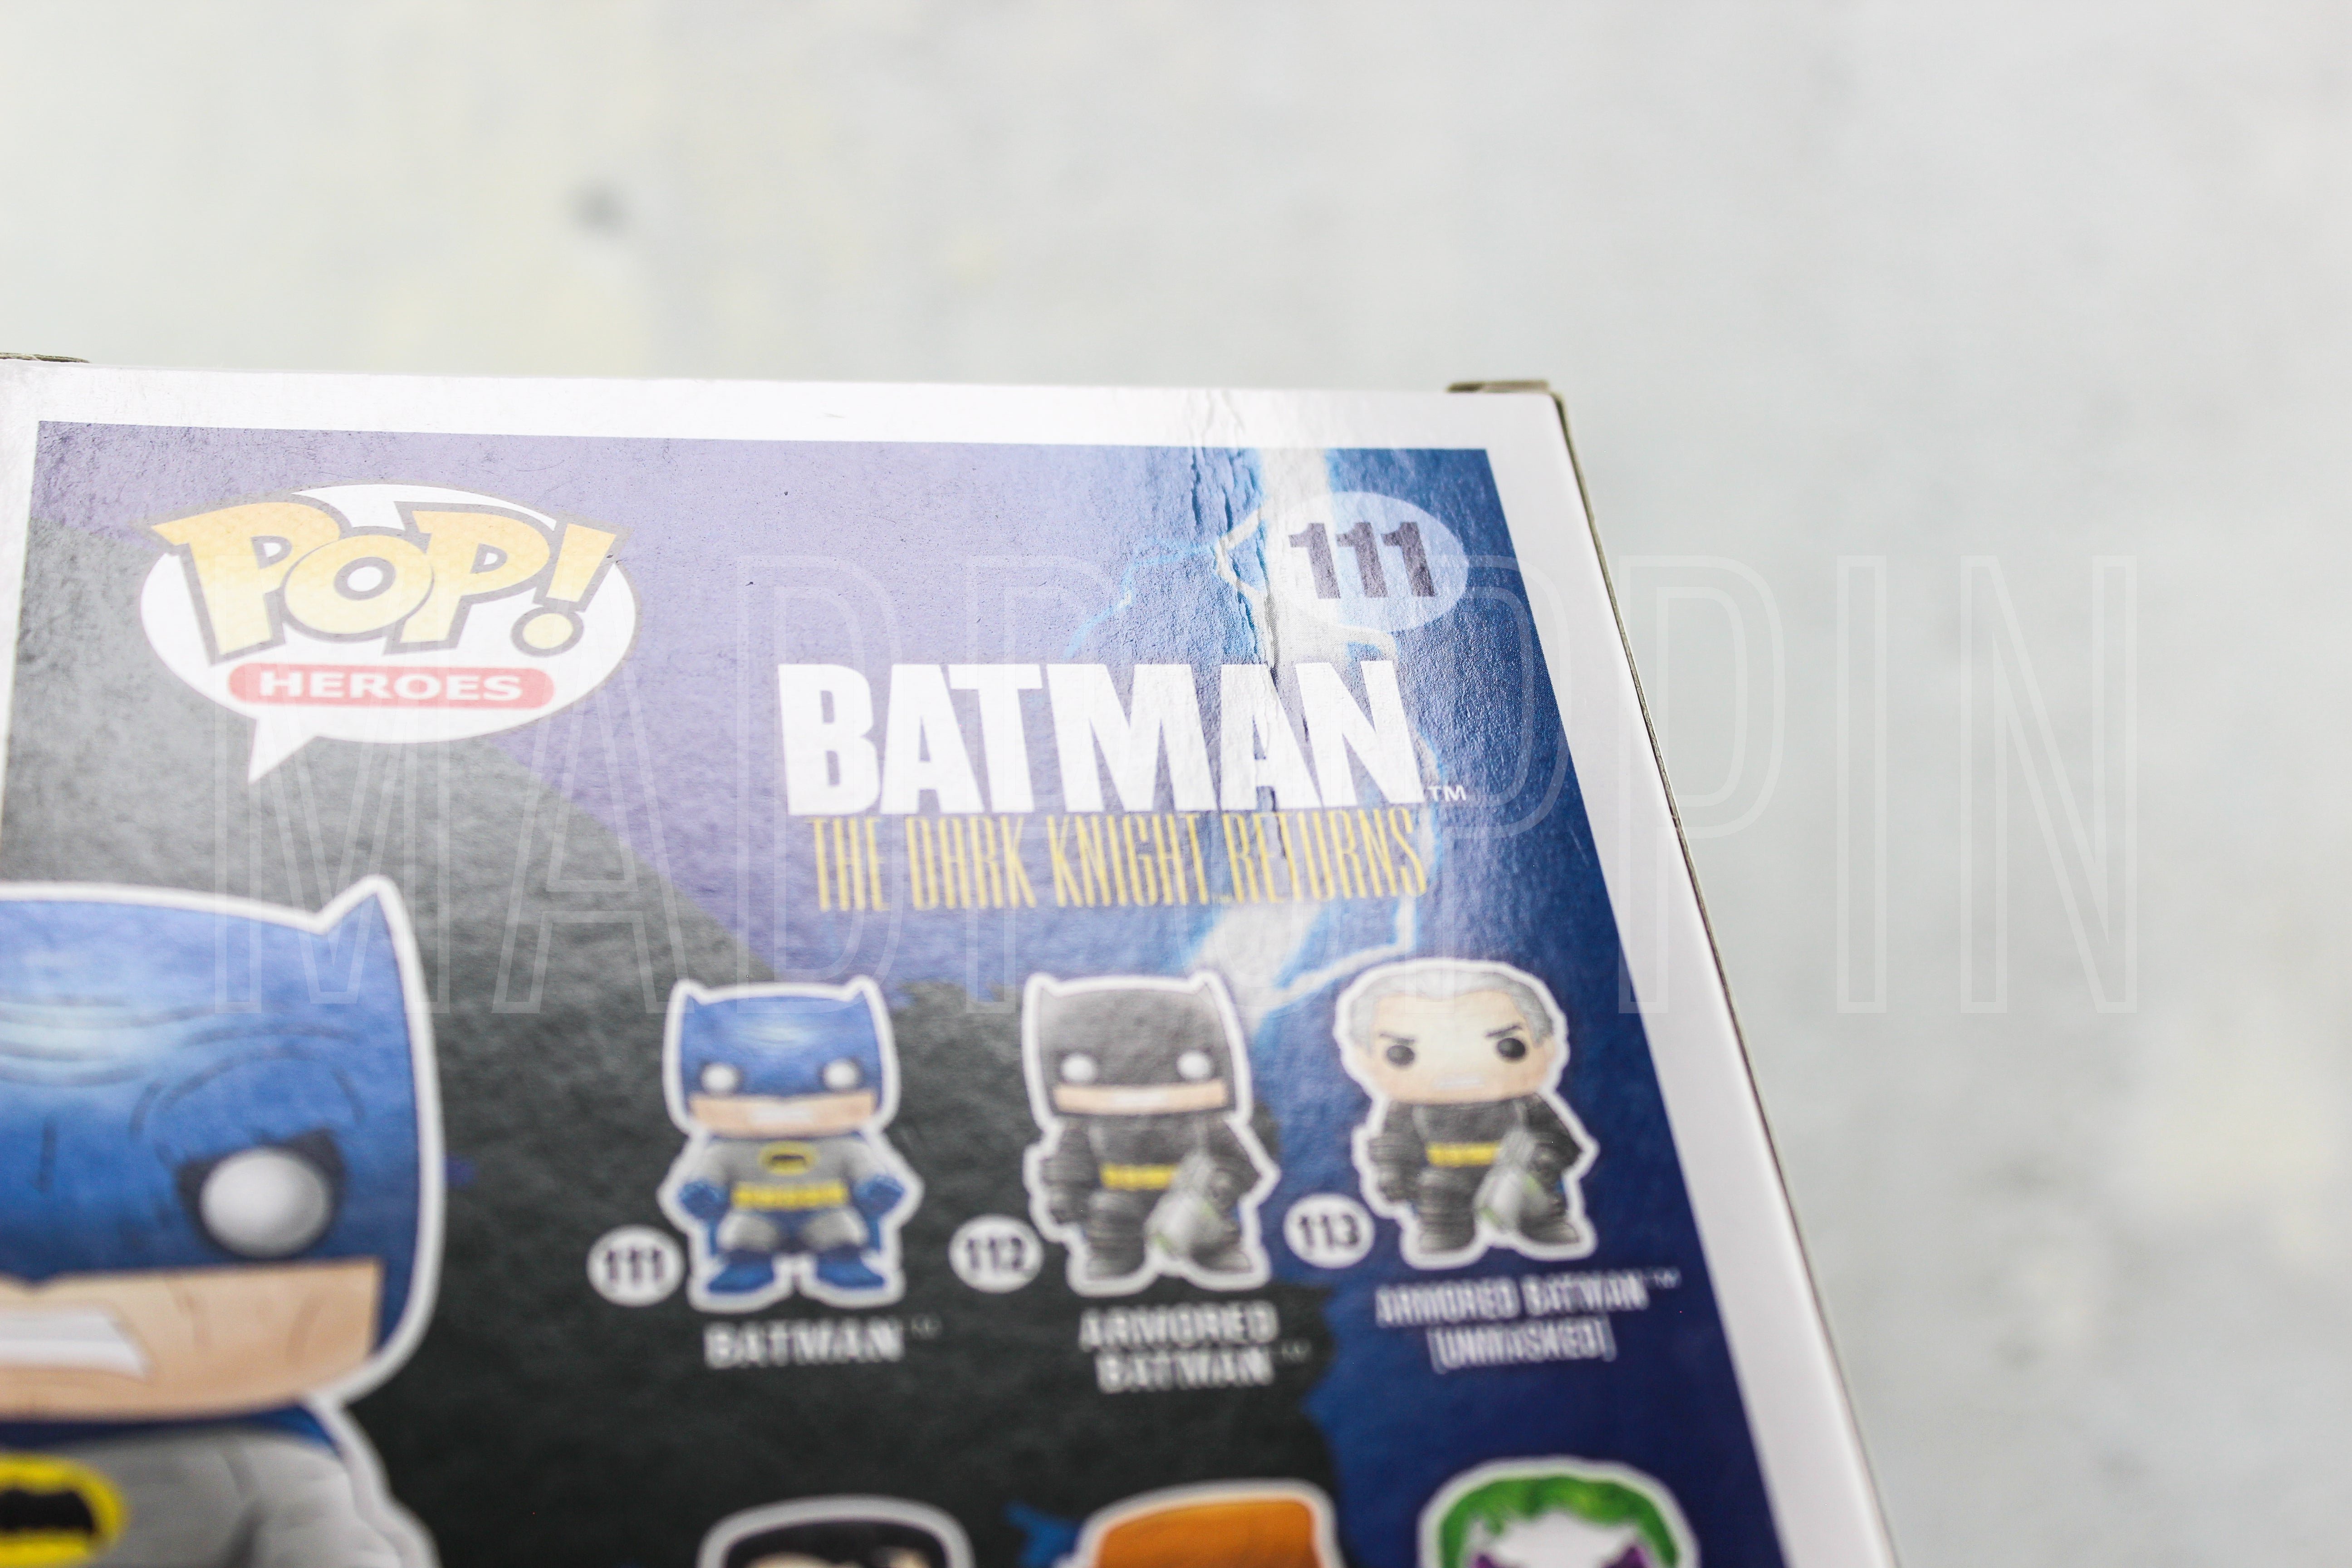 POP! Heroes: Batman: The Dark Knight Returns - Batman (Blue)